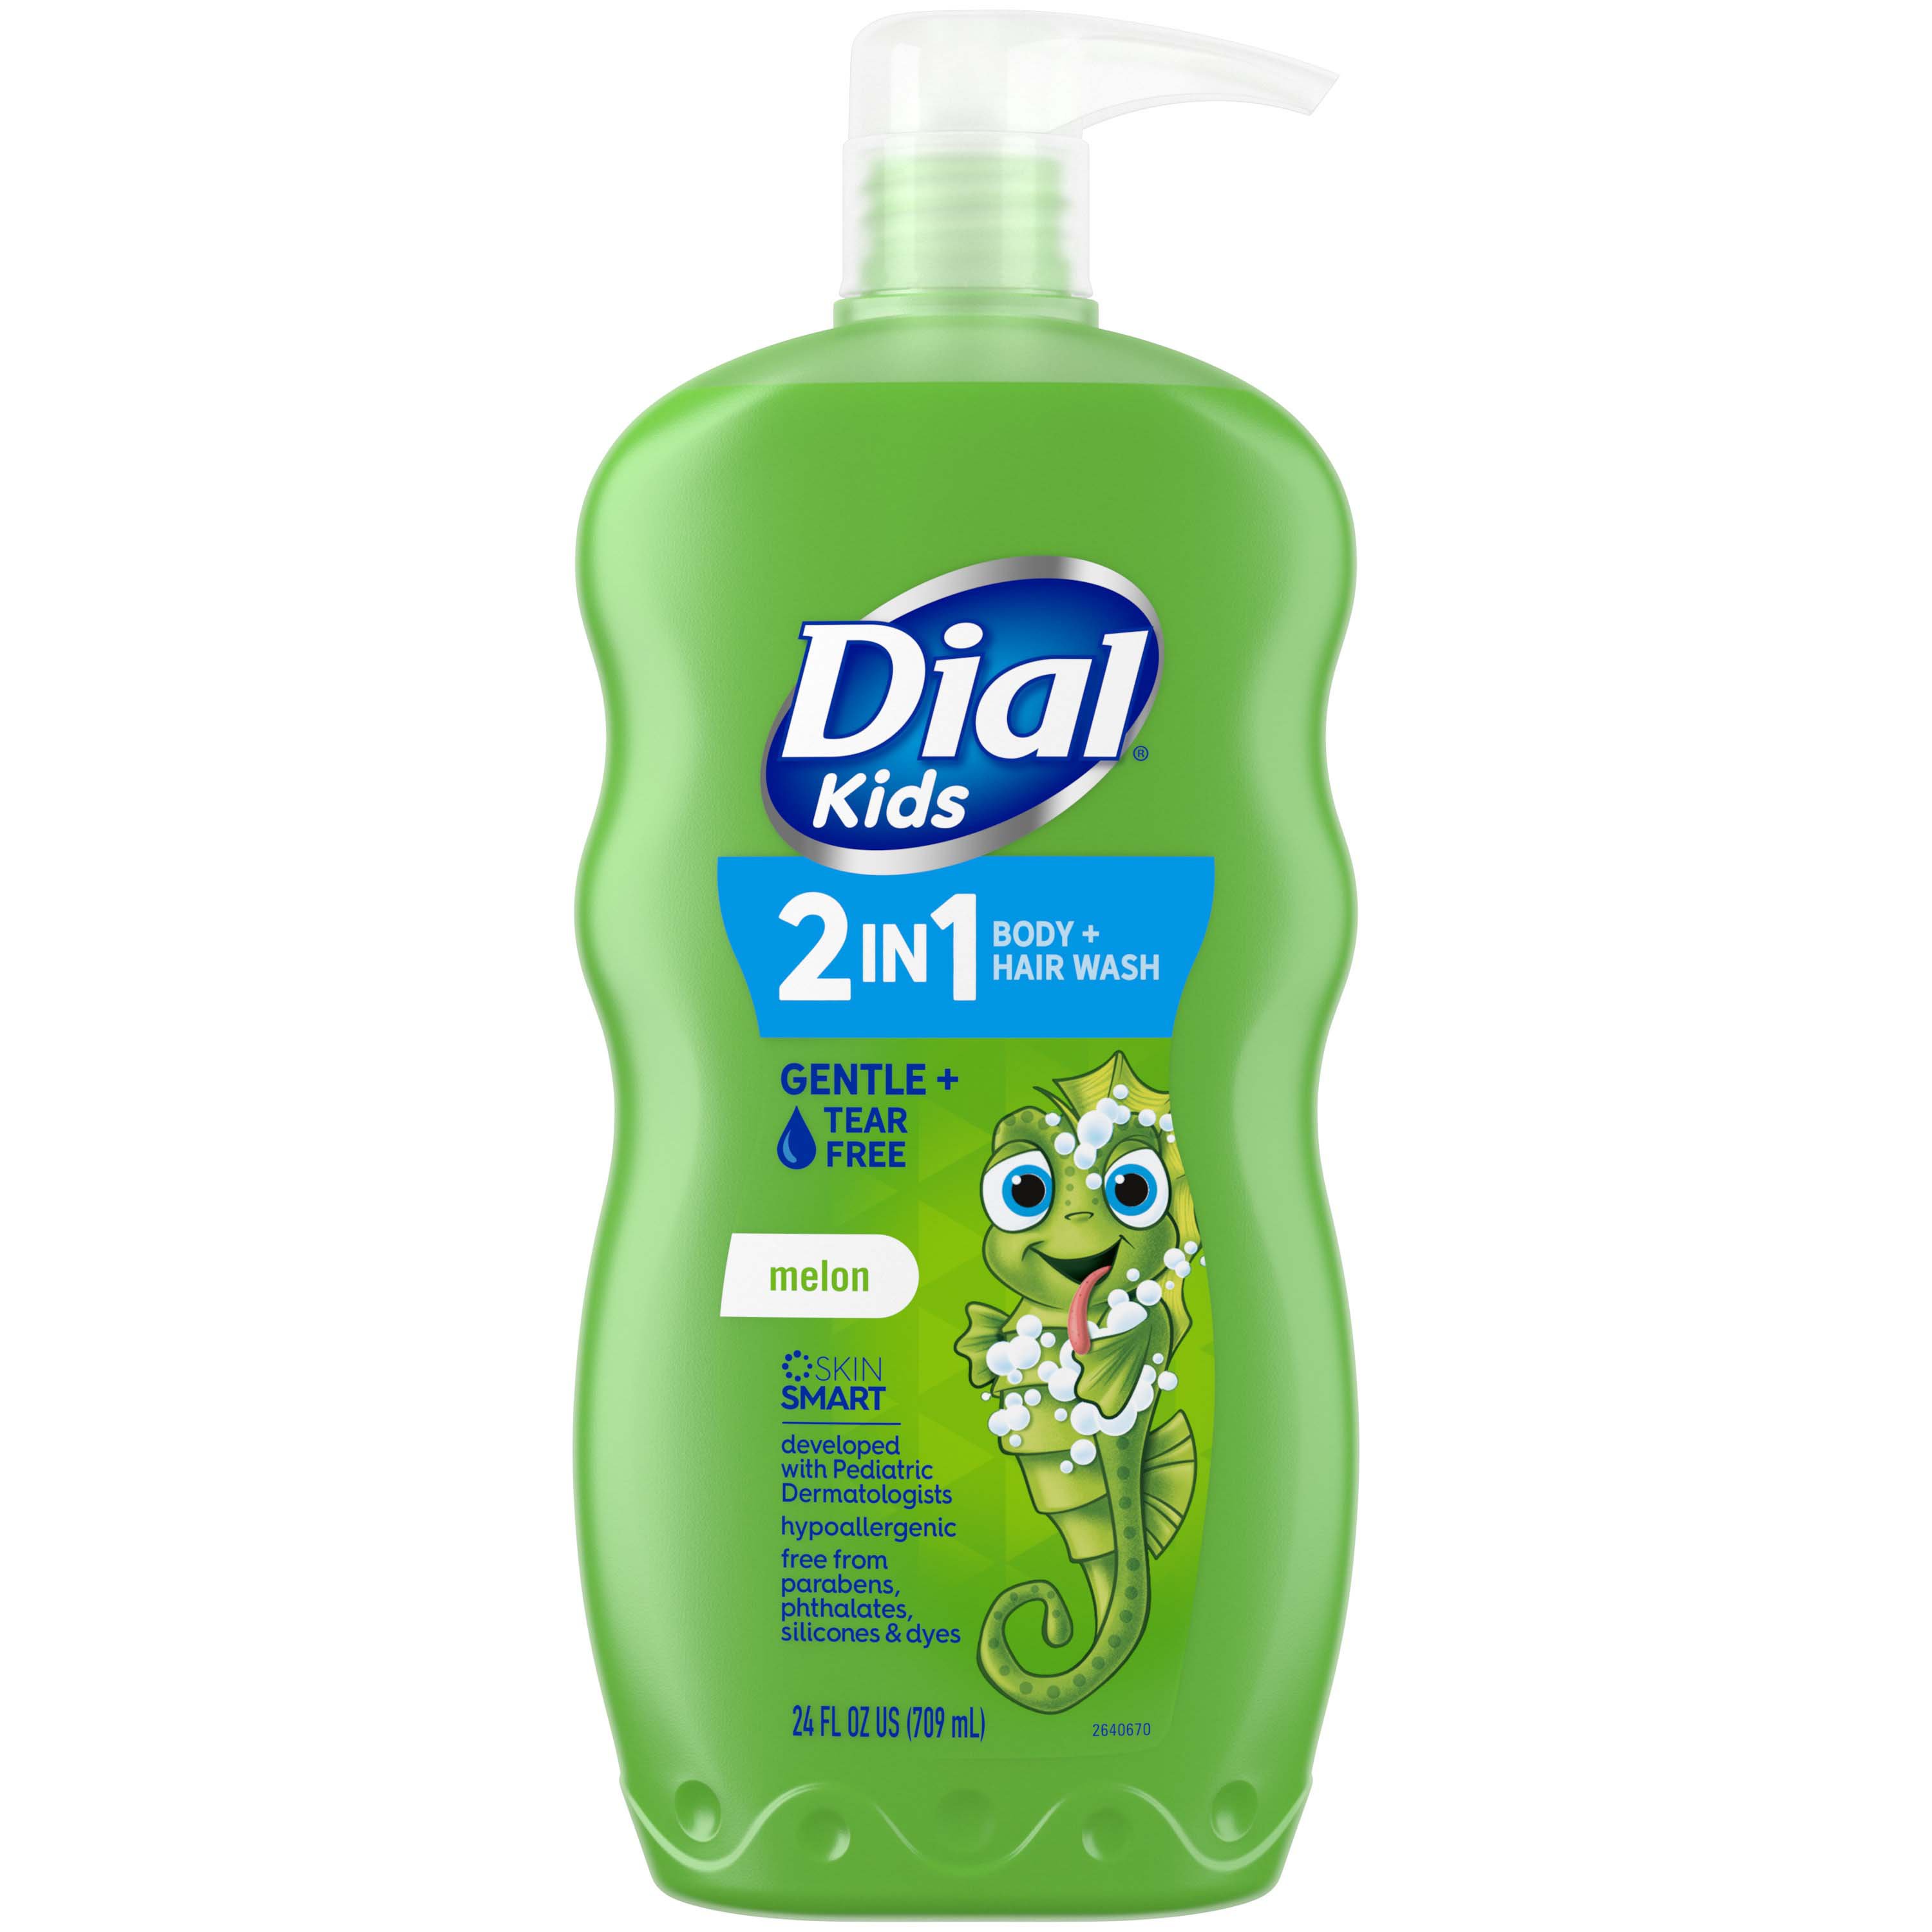 Dial Kids 2-in-1 Body + Hair Wash, Melon - Shop Health & Skin Care at H-E-B